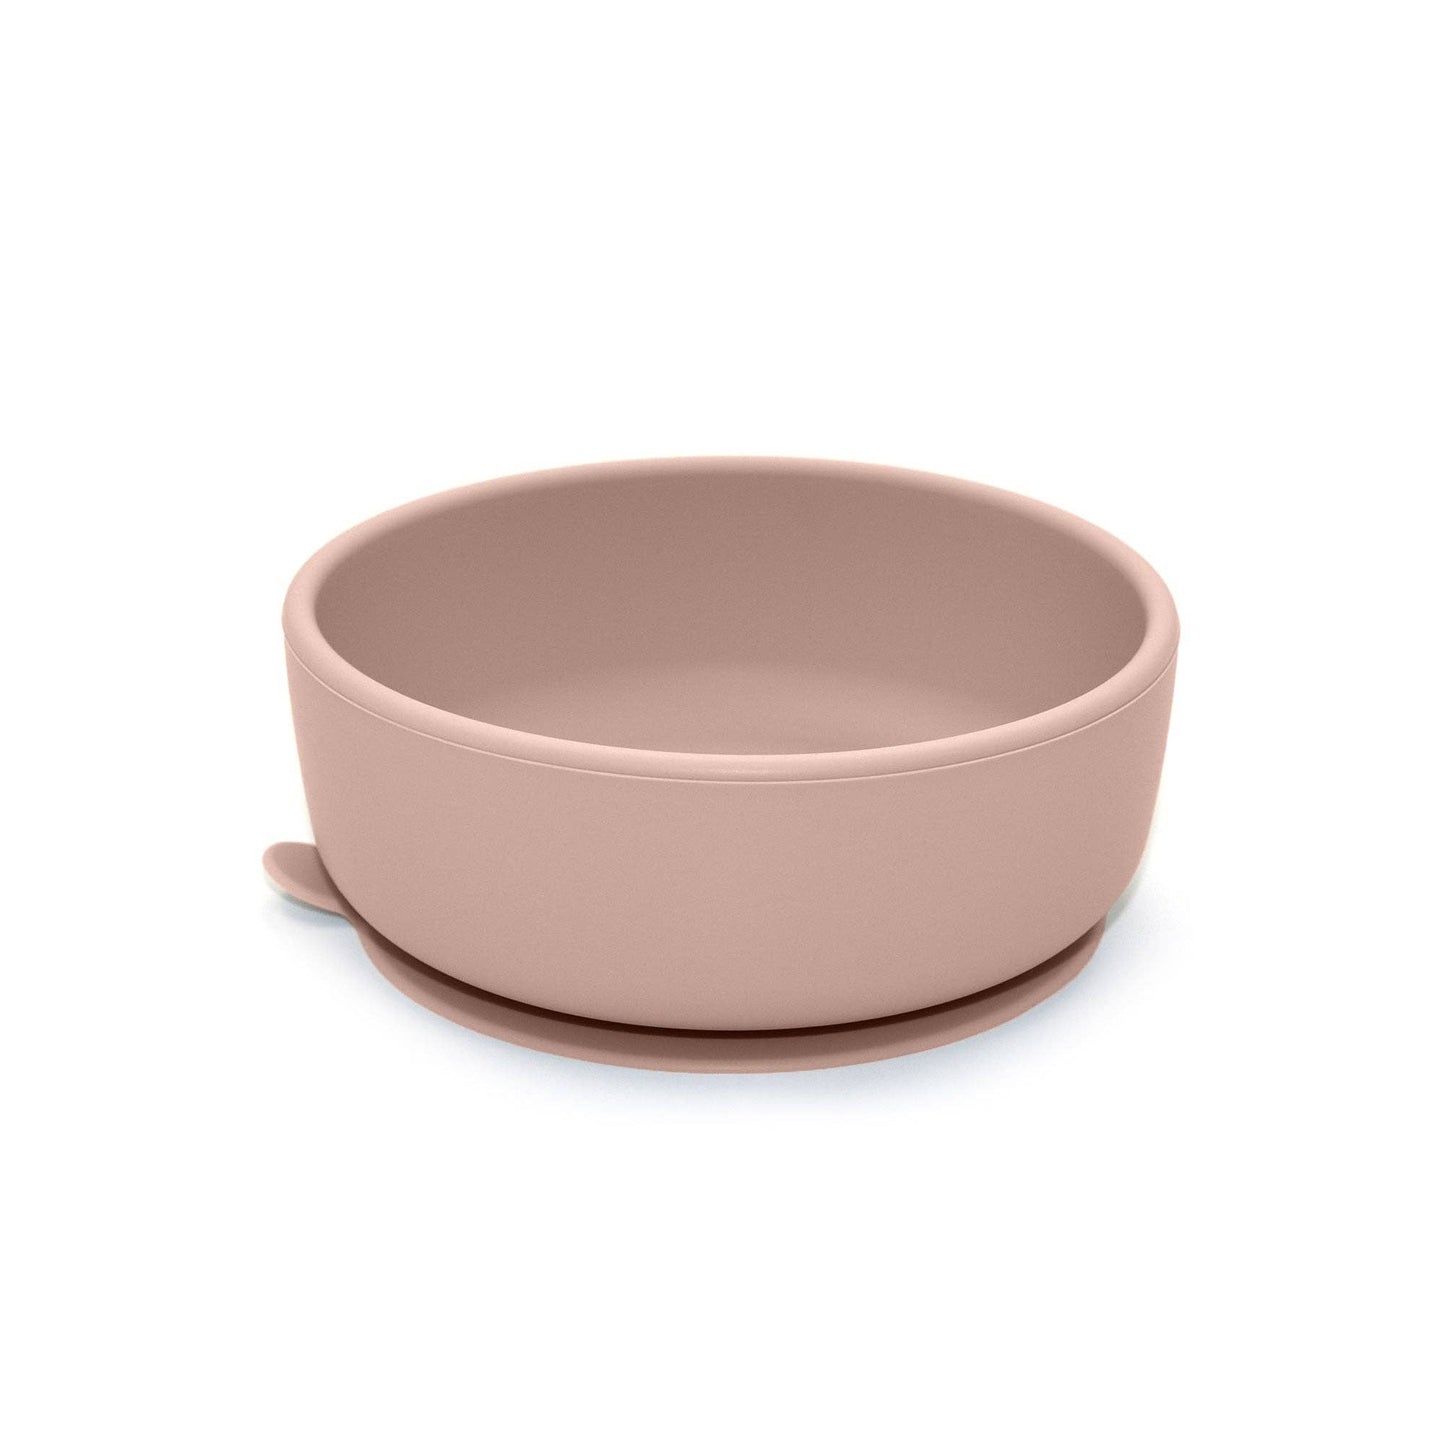 noüka Silicone Feeding Bowl with Suction Soft Blush